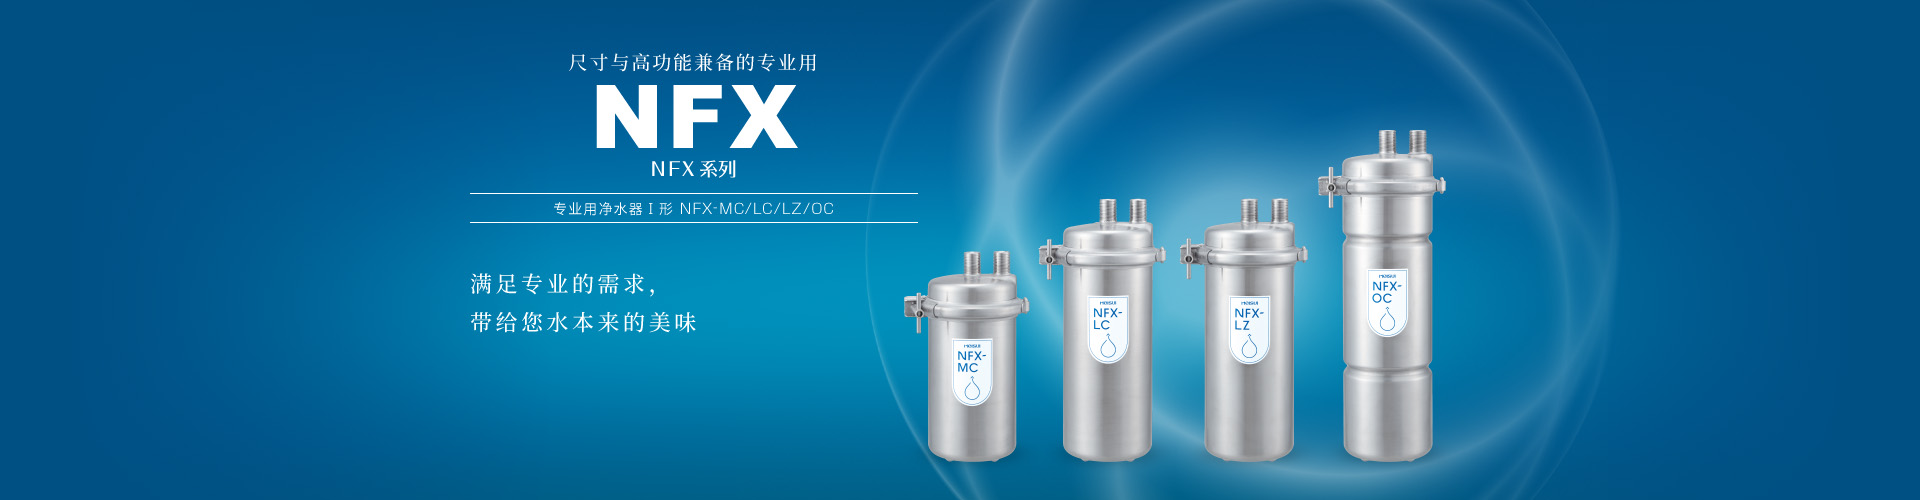 NFX系列 专业用净水器Ⅰ形